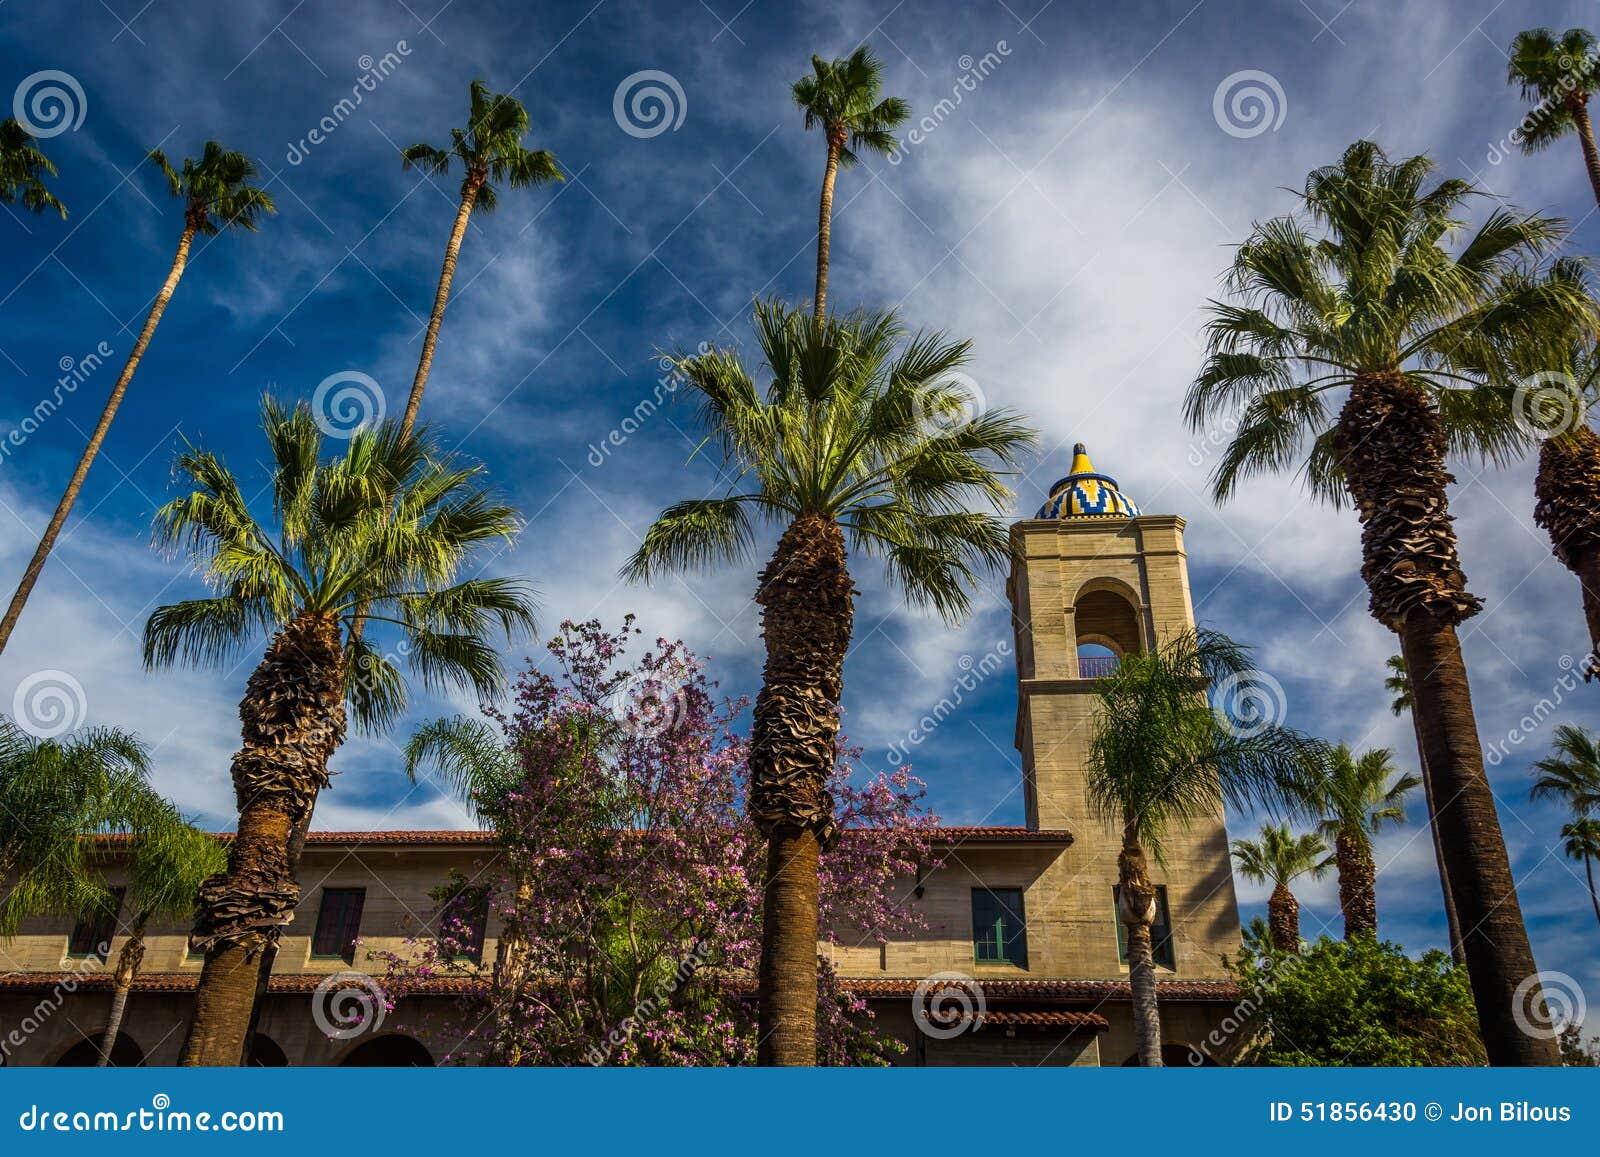 palm trees and the riverside municipal auditorium